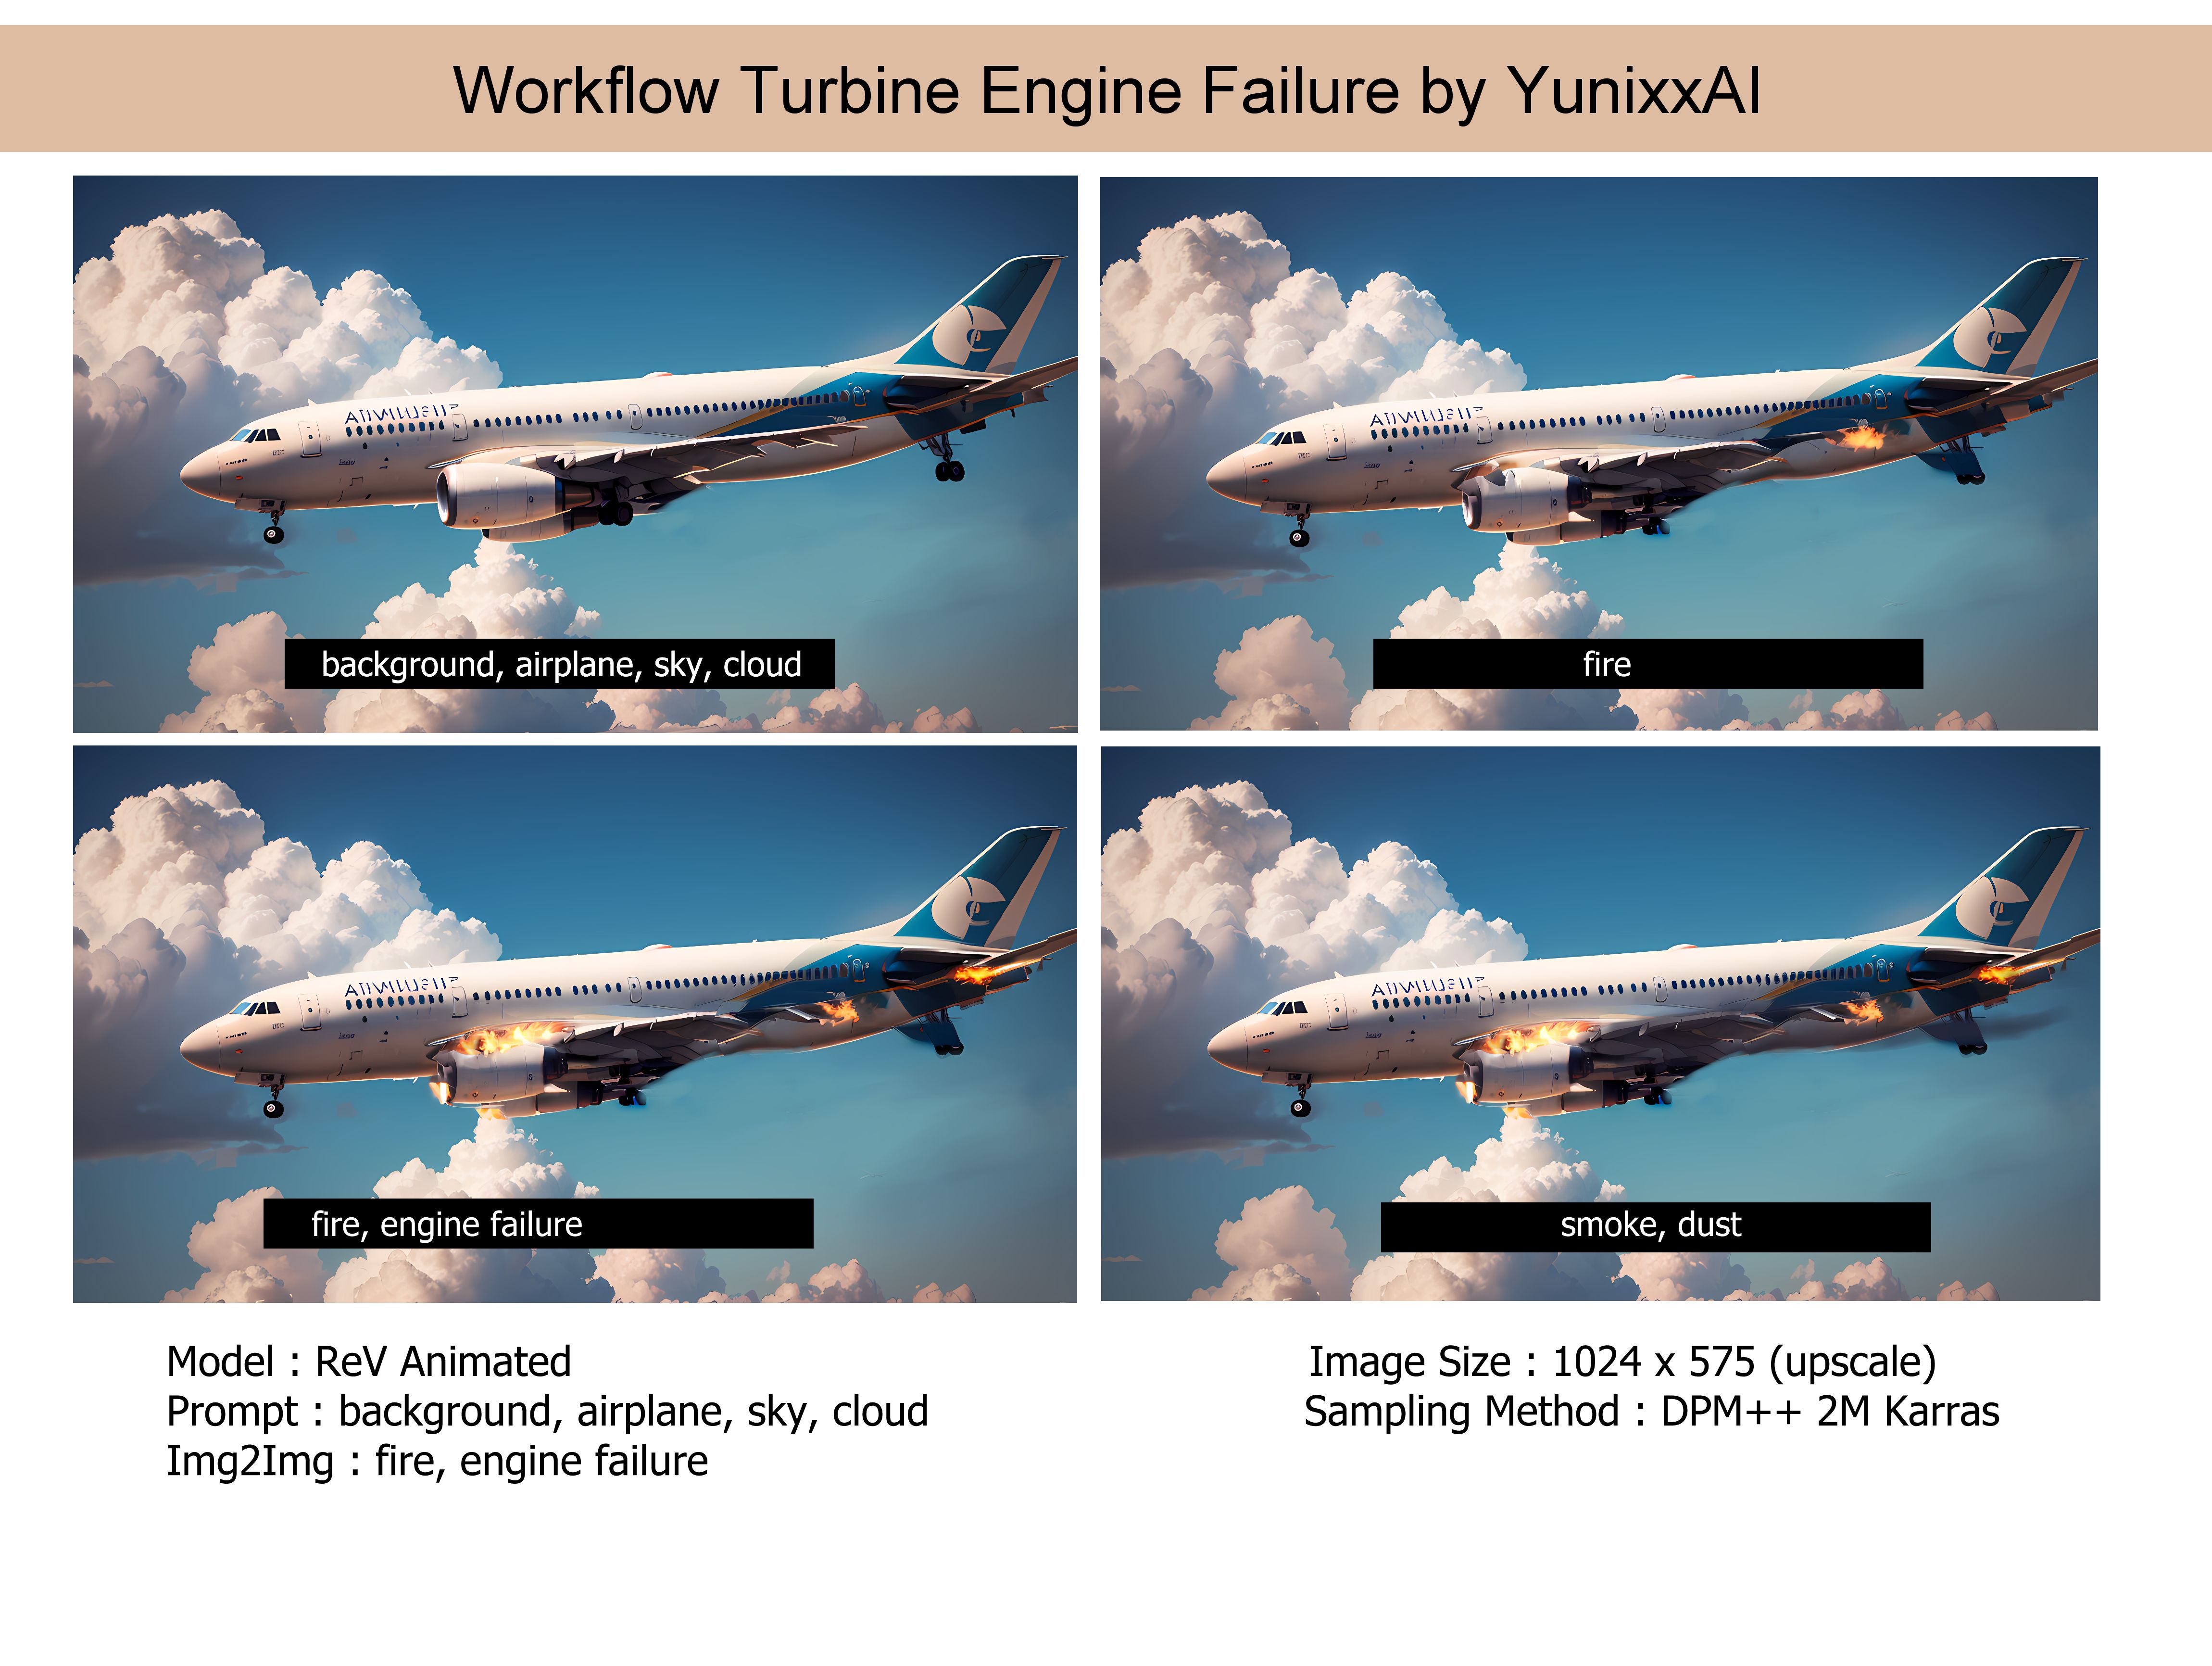 Workflow "Turbine Engine Failure"